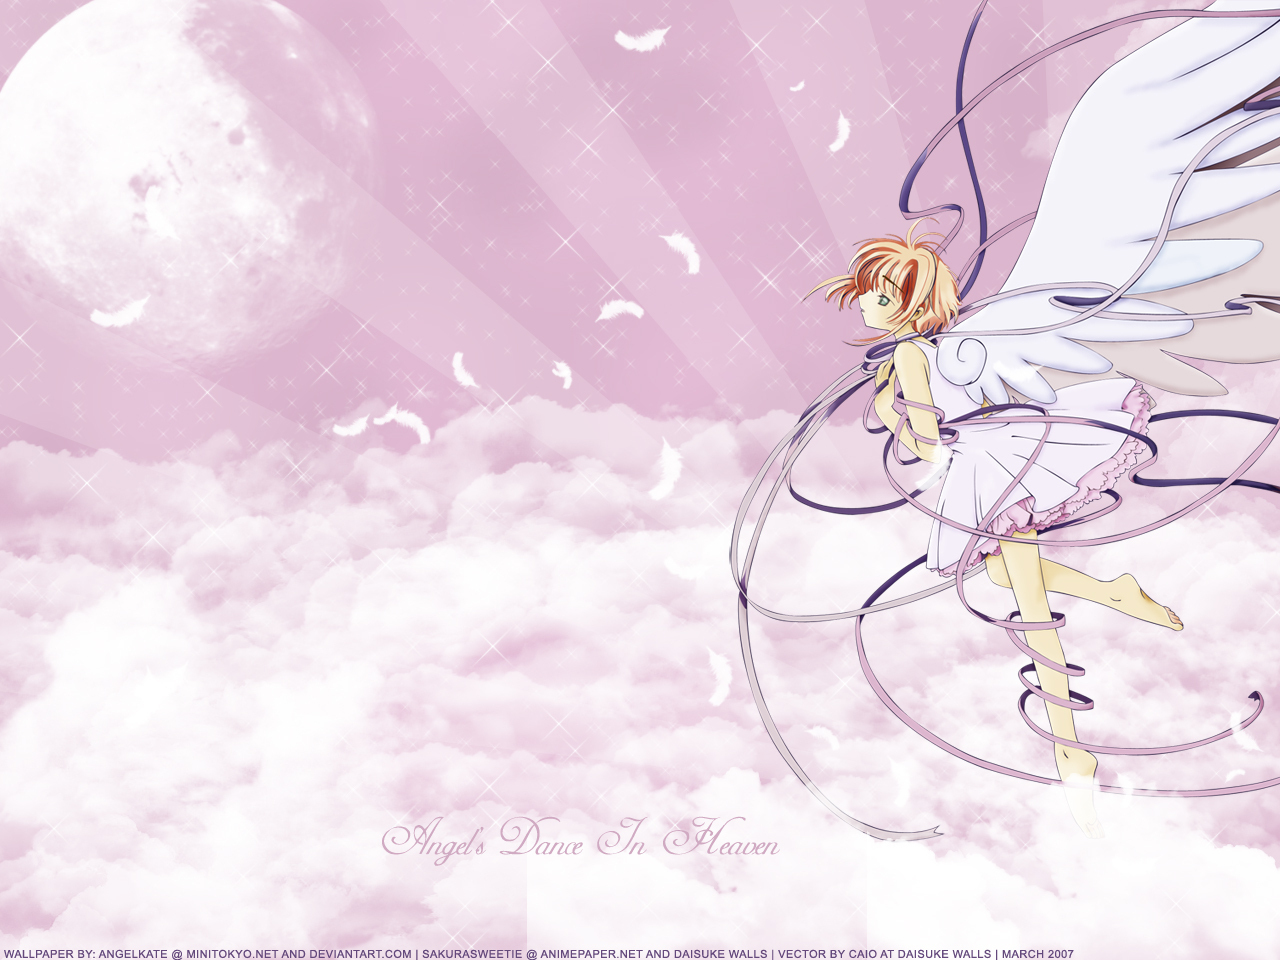 Cardcaptor Sakura Image HD Wallpaper And Background Photos